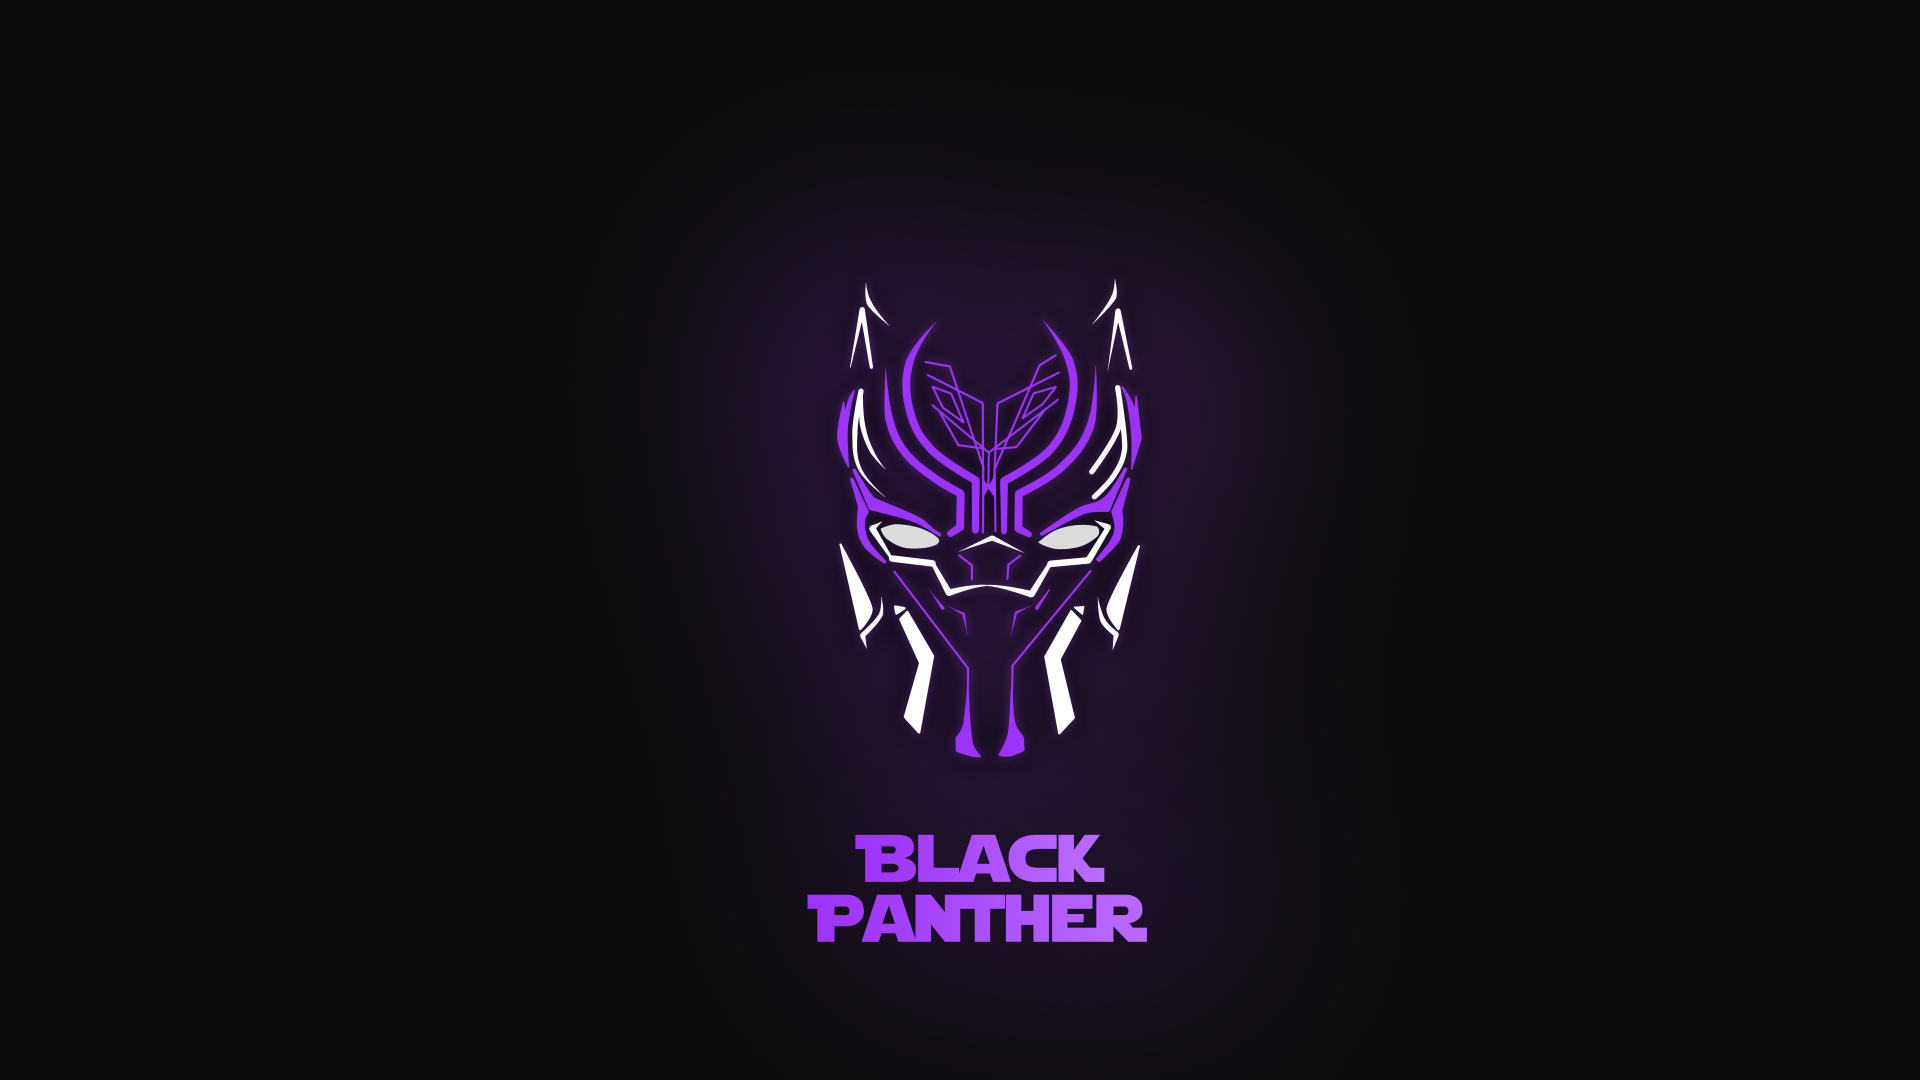 Download wallpaper of Black Panther, Purple, Dark background, Minimal, Neon, HD, 5K, Creative Graphics. Black panther HD wallpaper, Neon wallpaper, Black panther